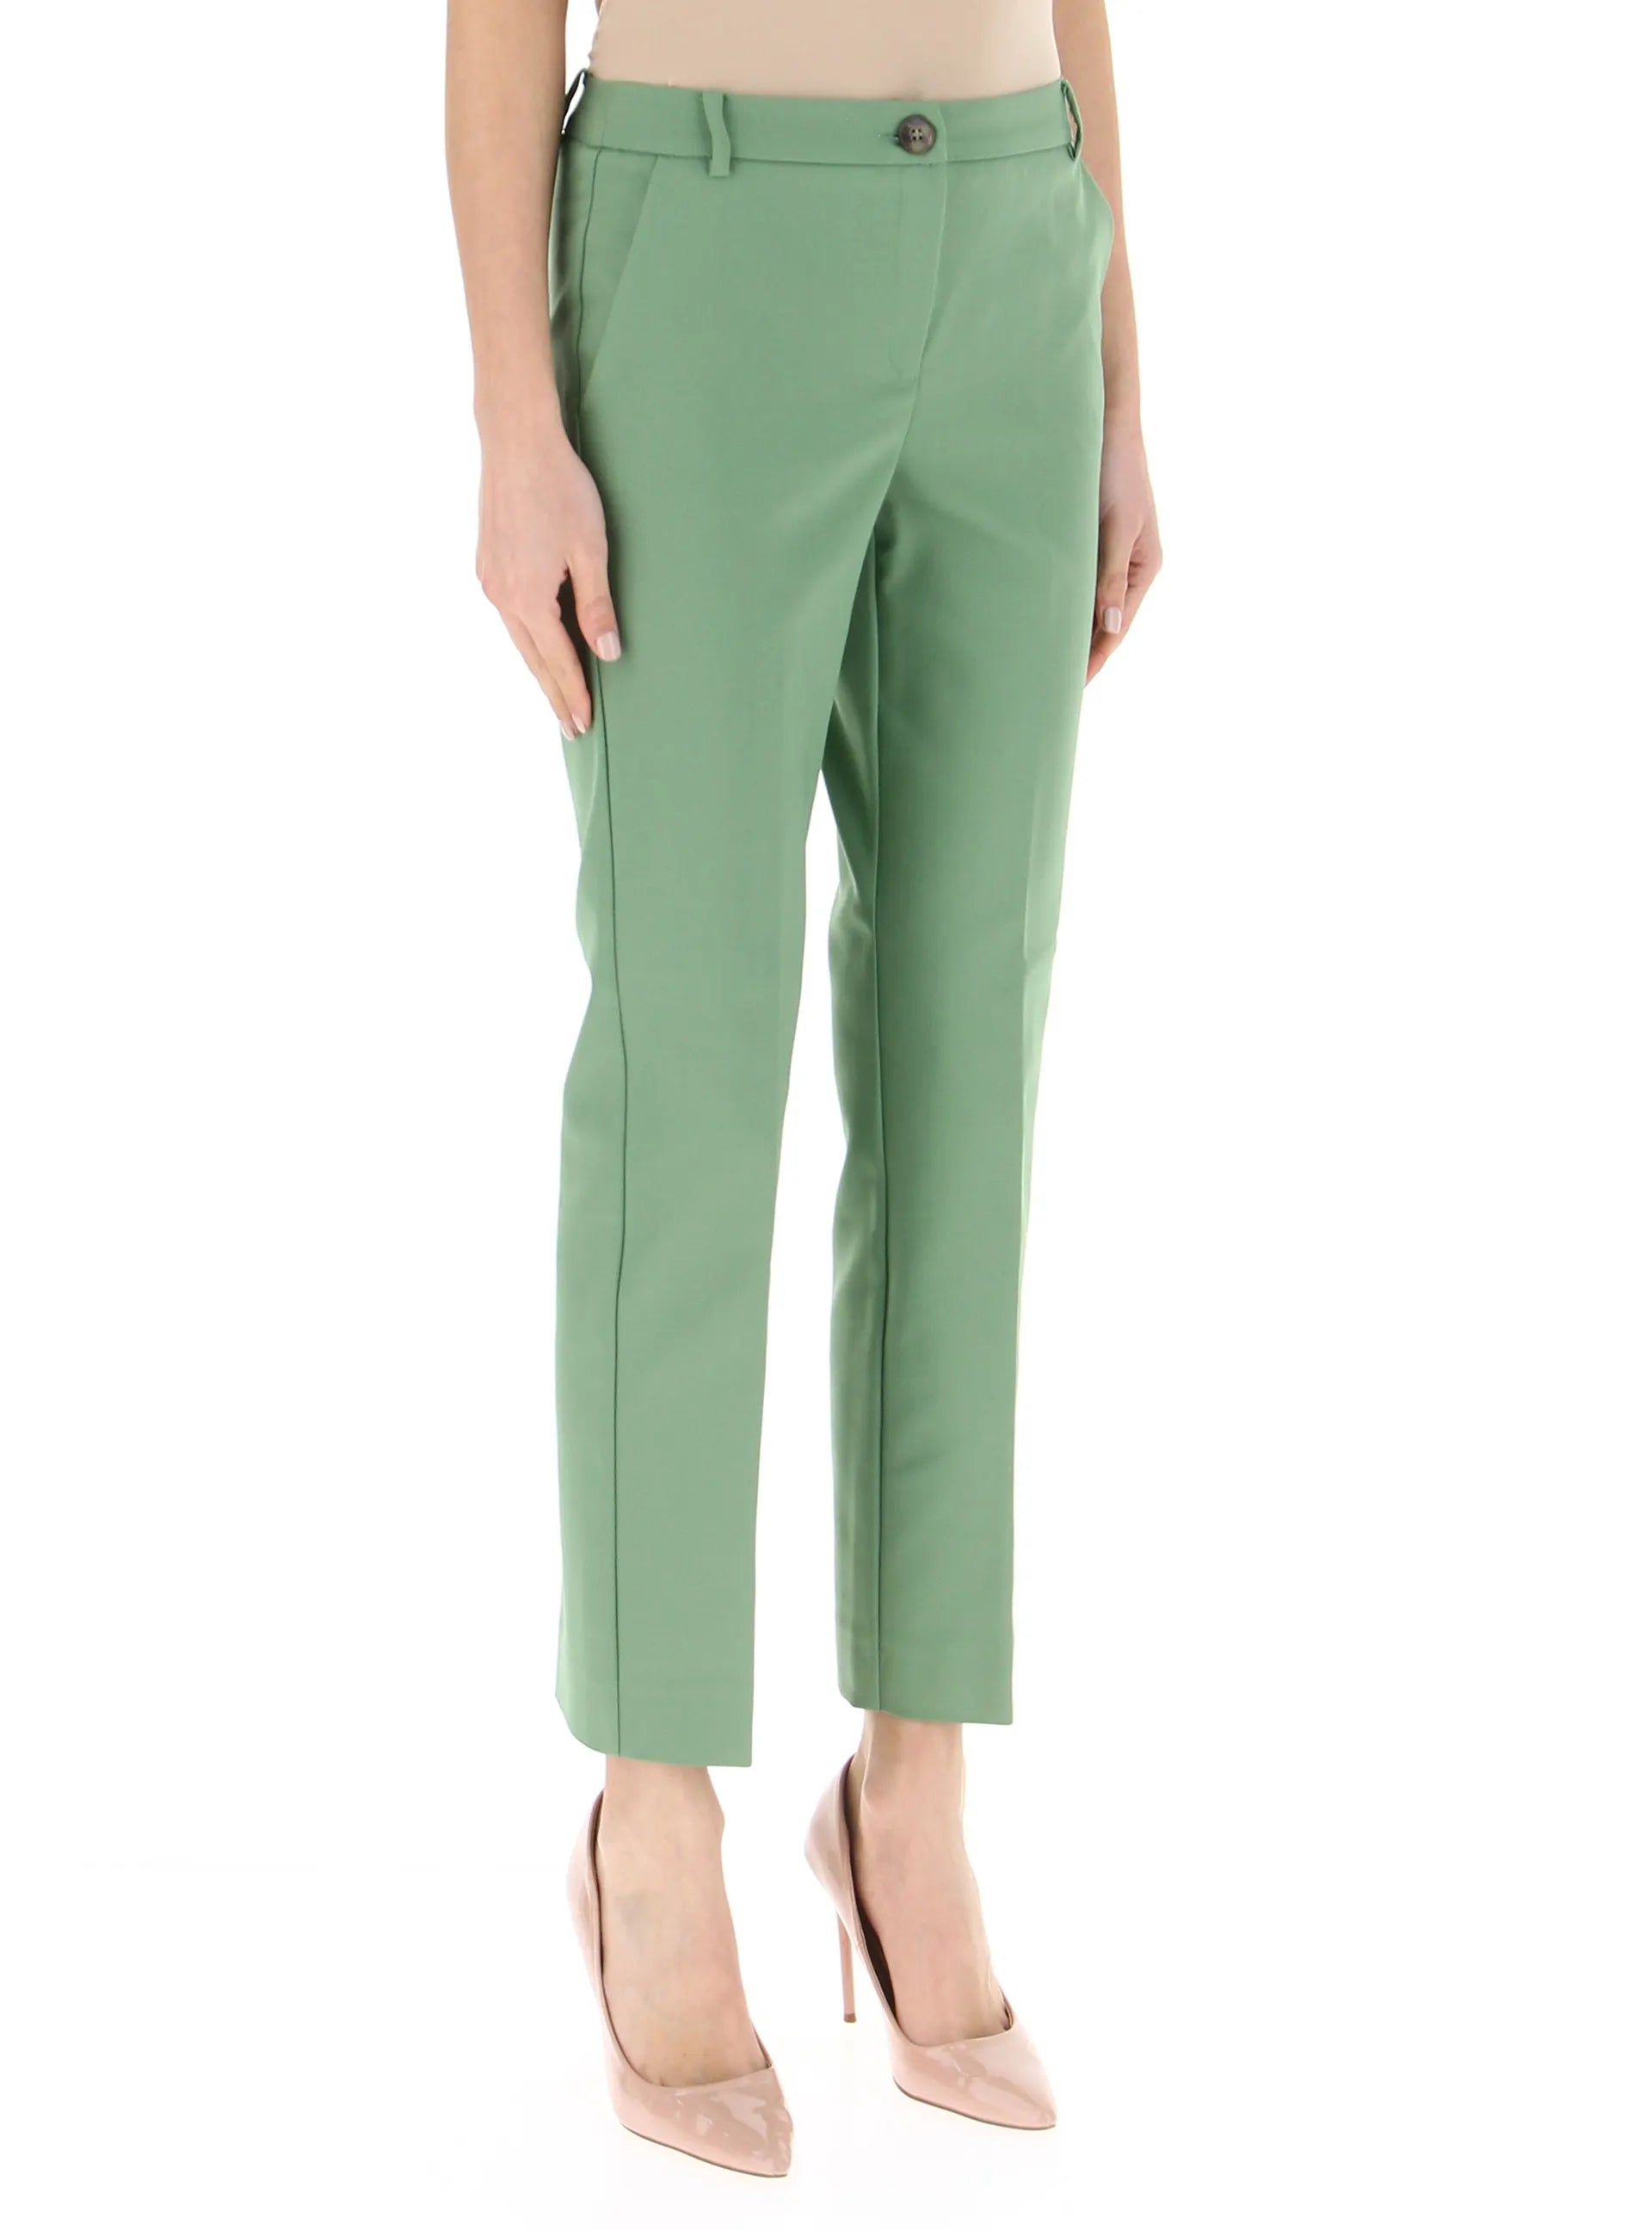 Pantalone Emme Marella verde salvia laterale